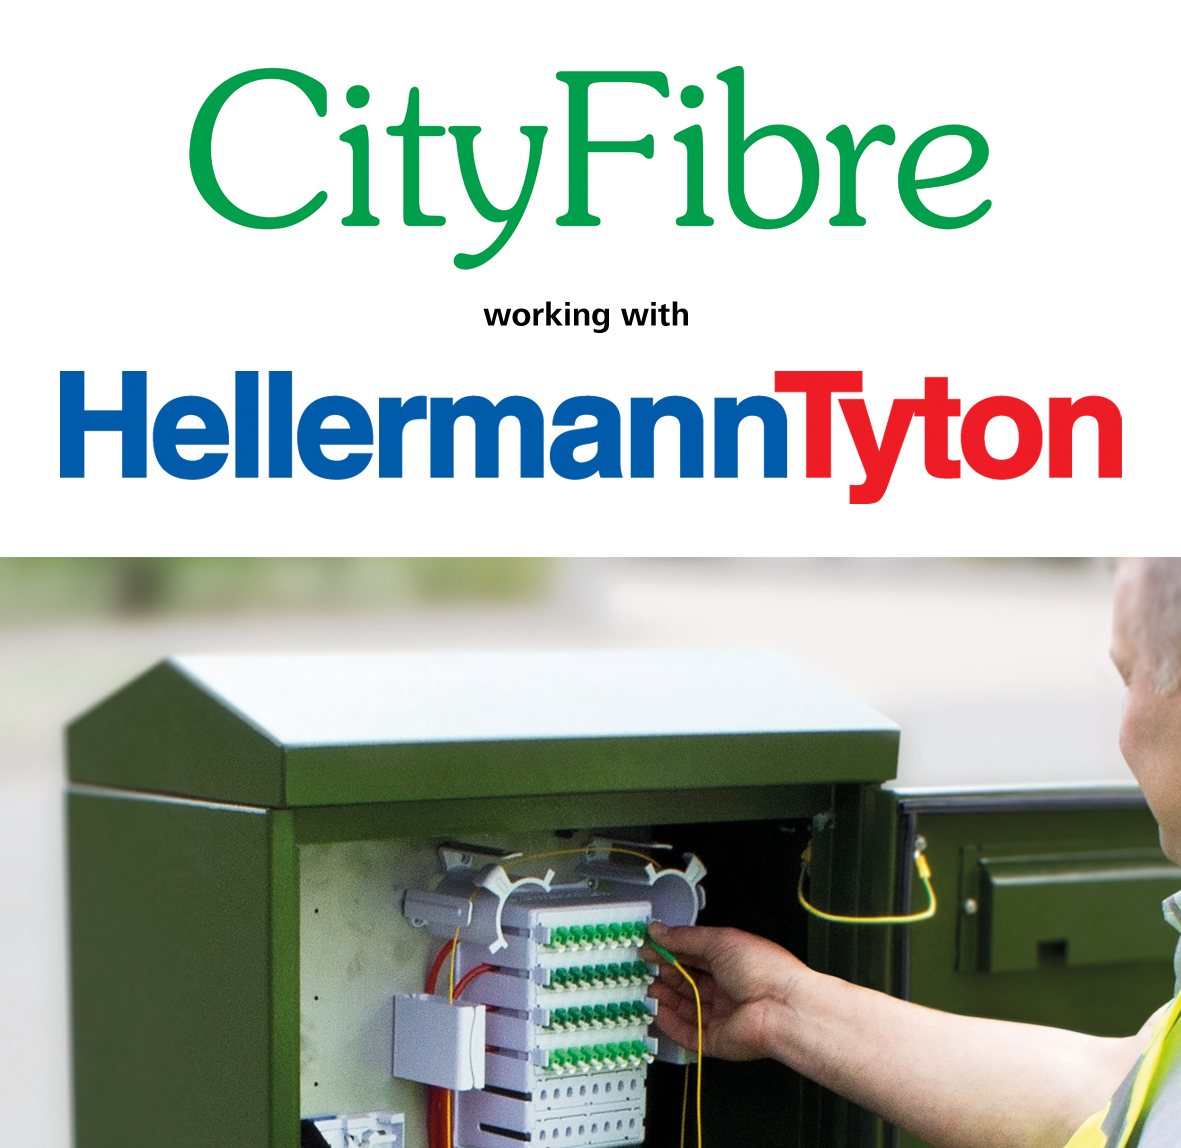 HellermannTyton Sign Supplier Agreement with CityFibre